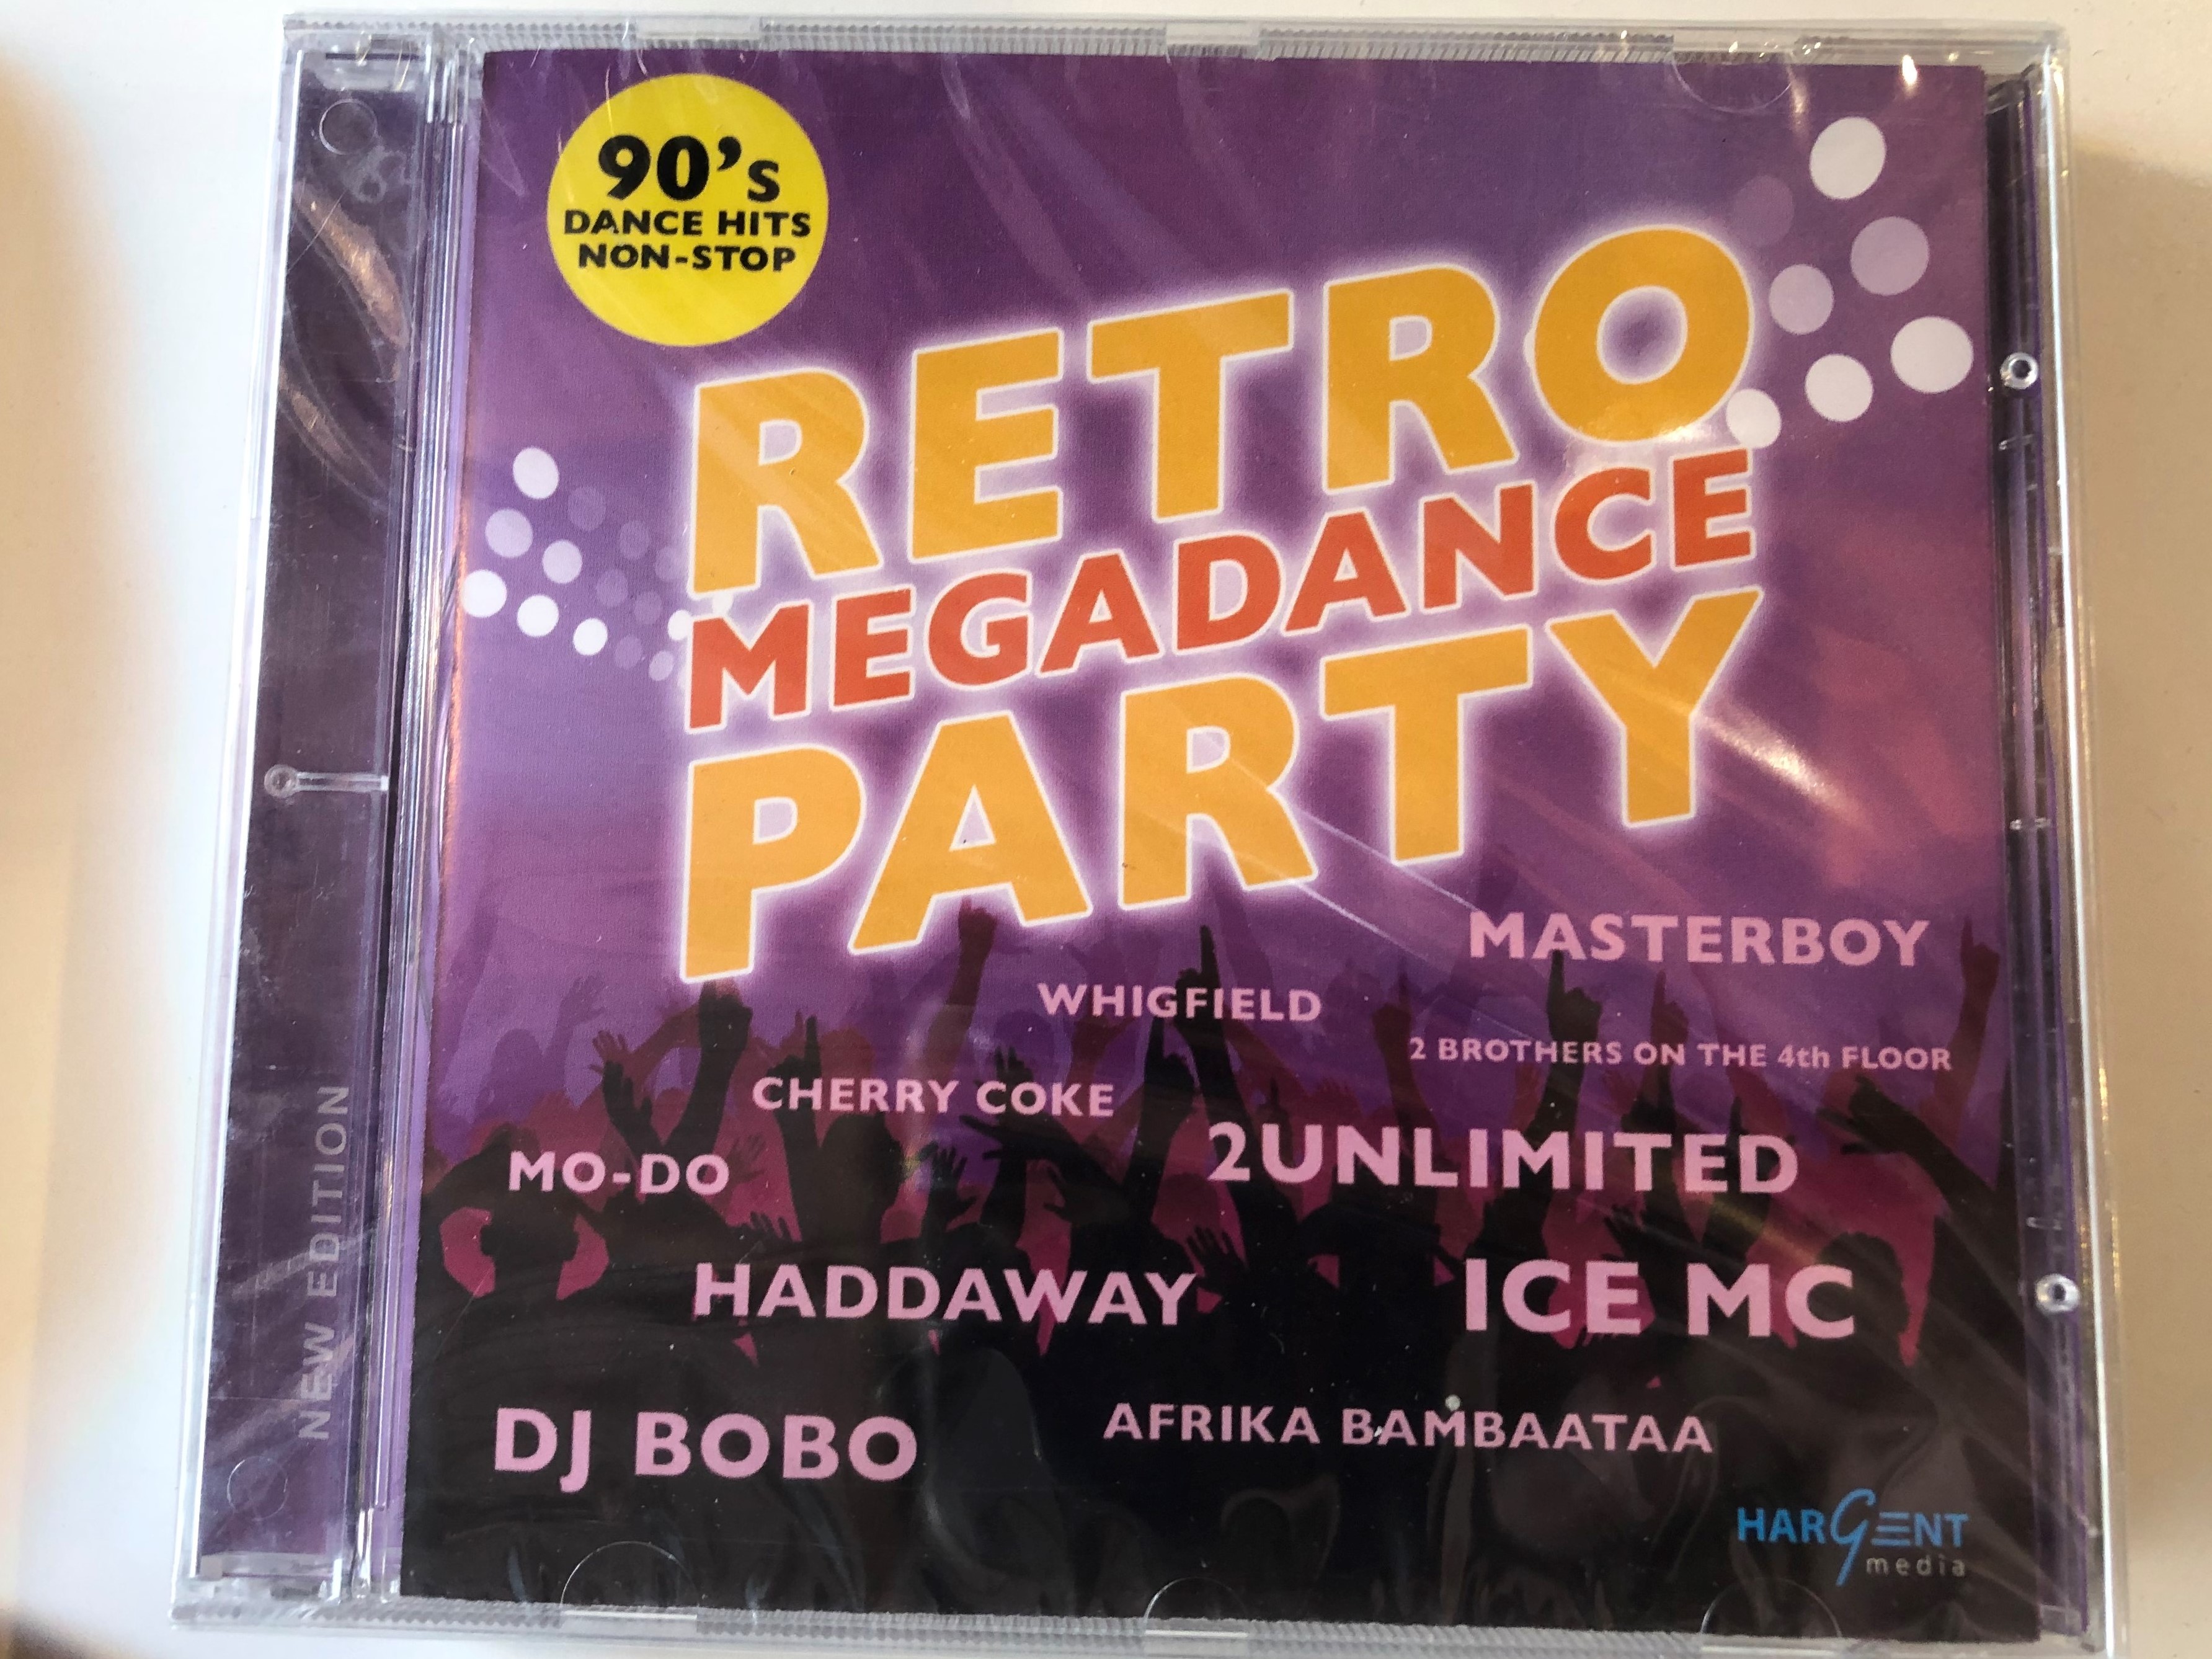 retro-megadance-party-masterboy-whighfield-2-brothers-on-the-4th-floor-cherry-coke-2unlimited-mo-do-haddaway-dj-bobo-afrika-bambaataa-hargent-media-audio-cd-2007-hgch-708-2-1-.jpg